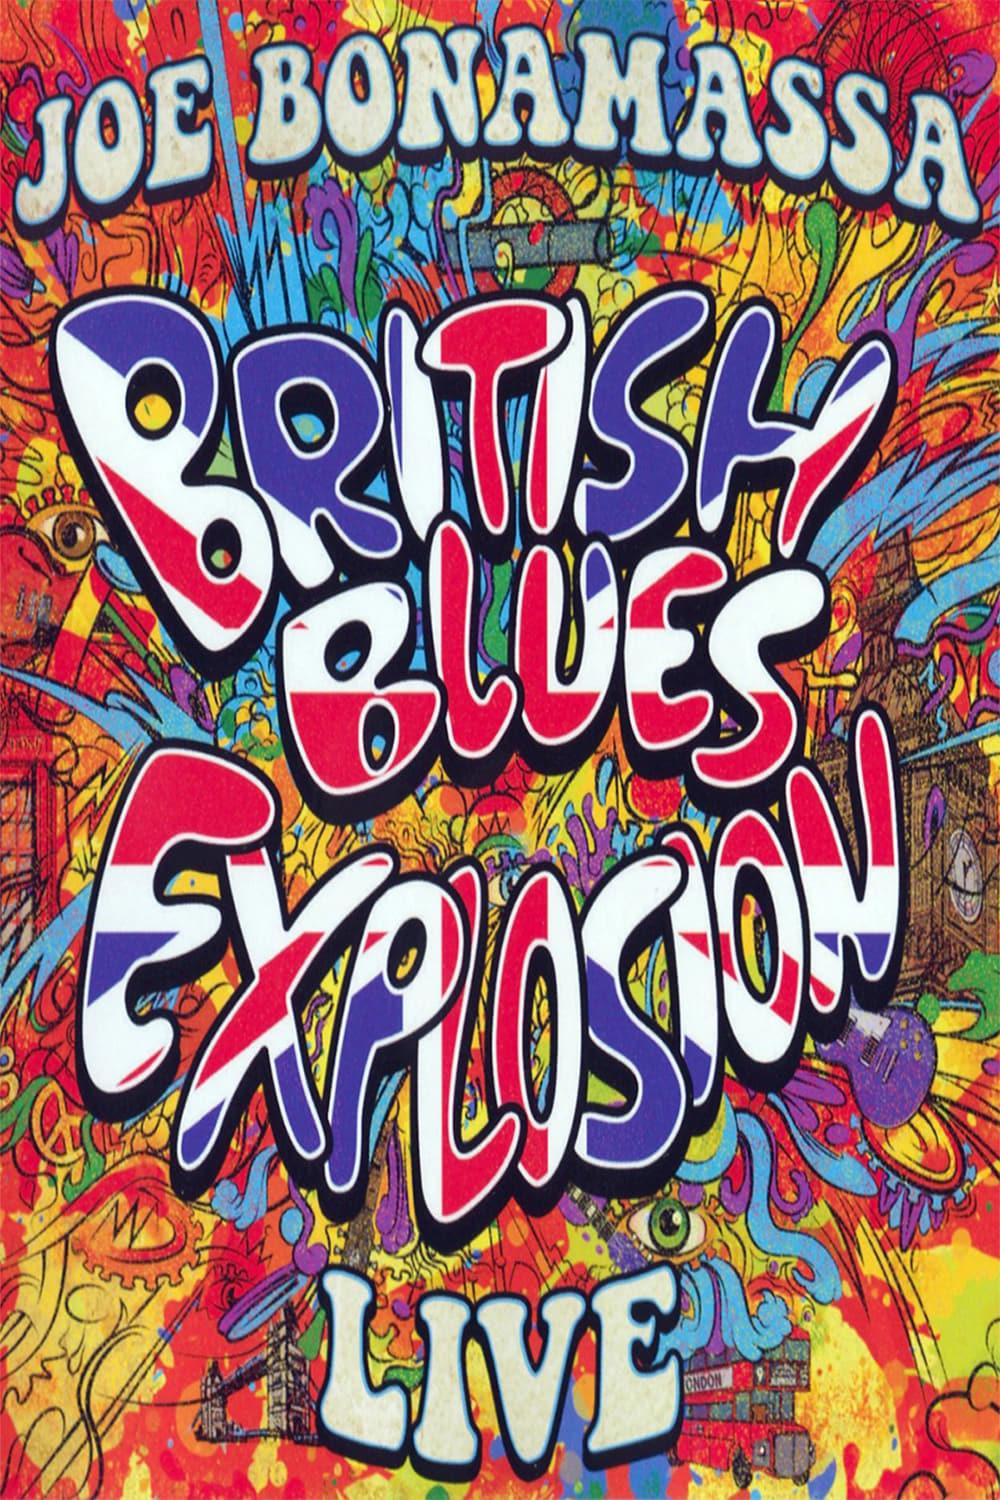 Joe Bonamassa - British Blues Explosion Live poster